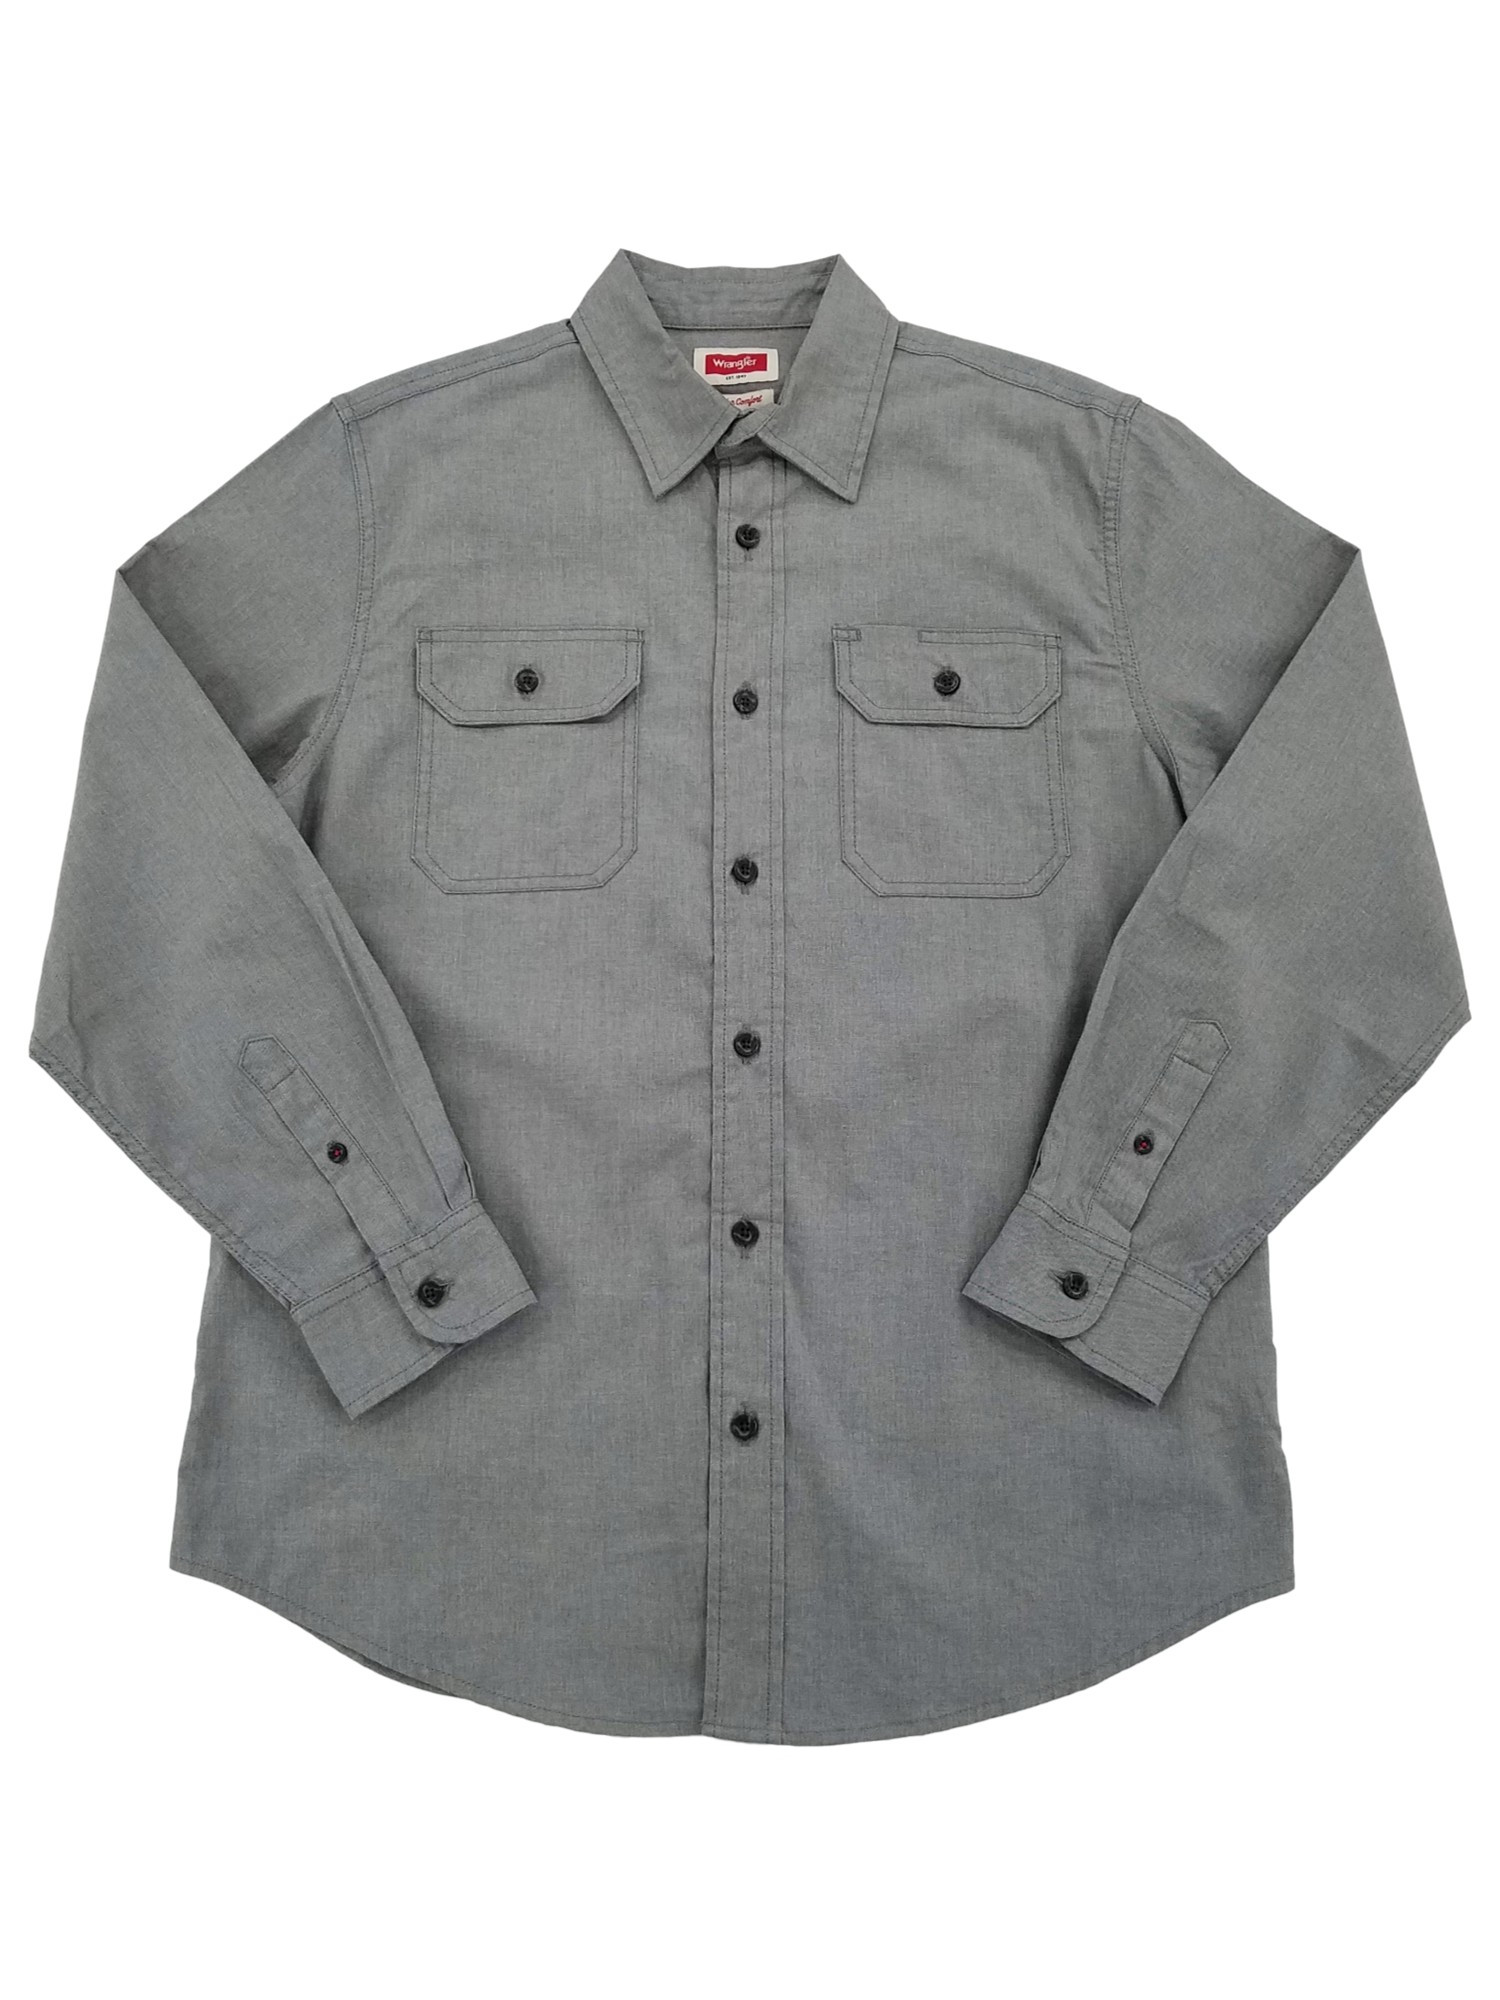 Wrangler Mens Gray Relaxed Fit Long Sleeve Button-Up Shirt Medium